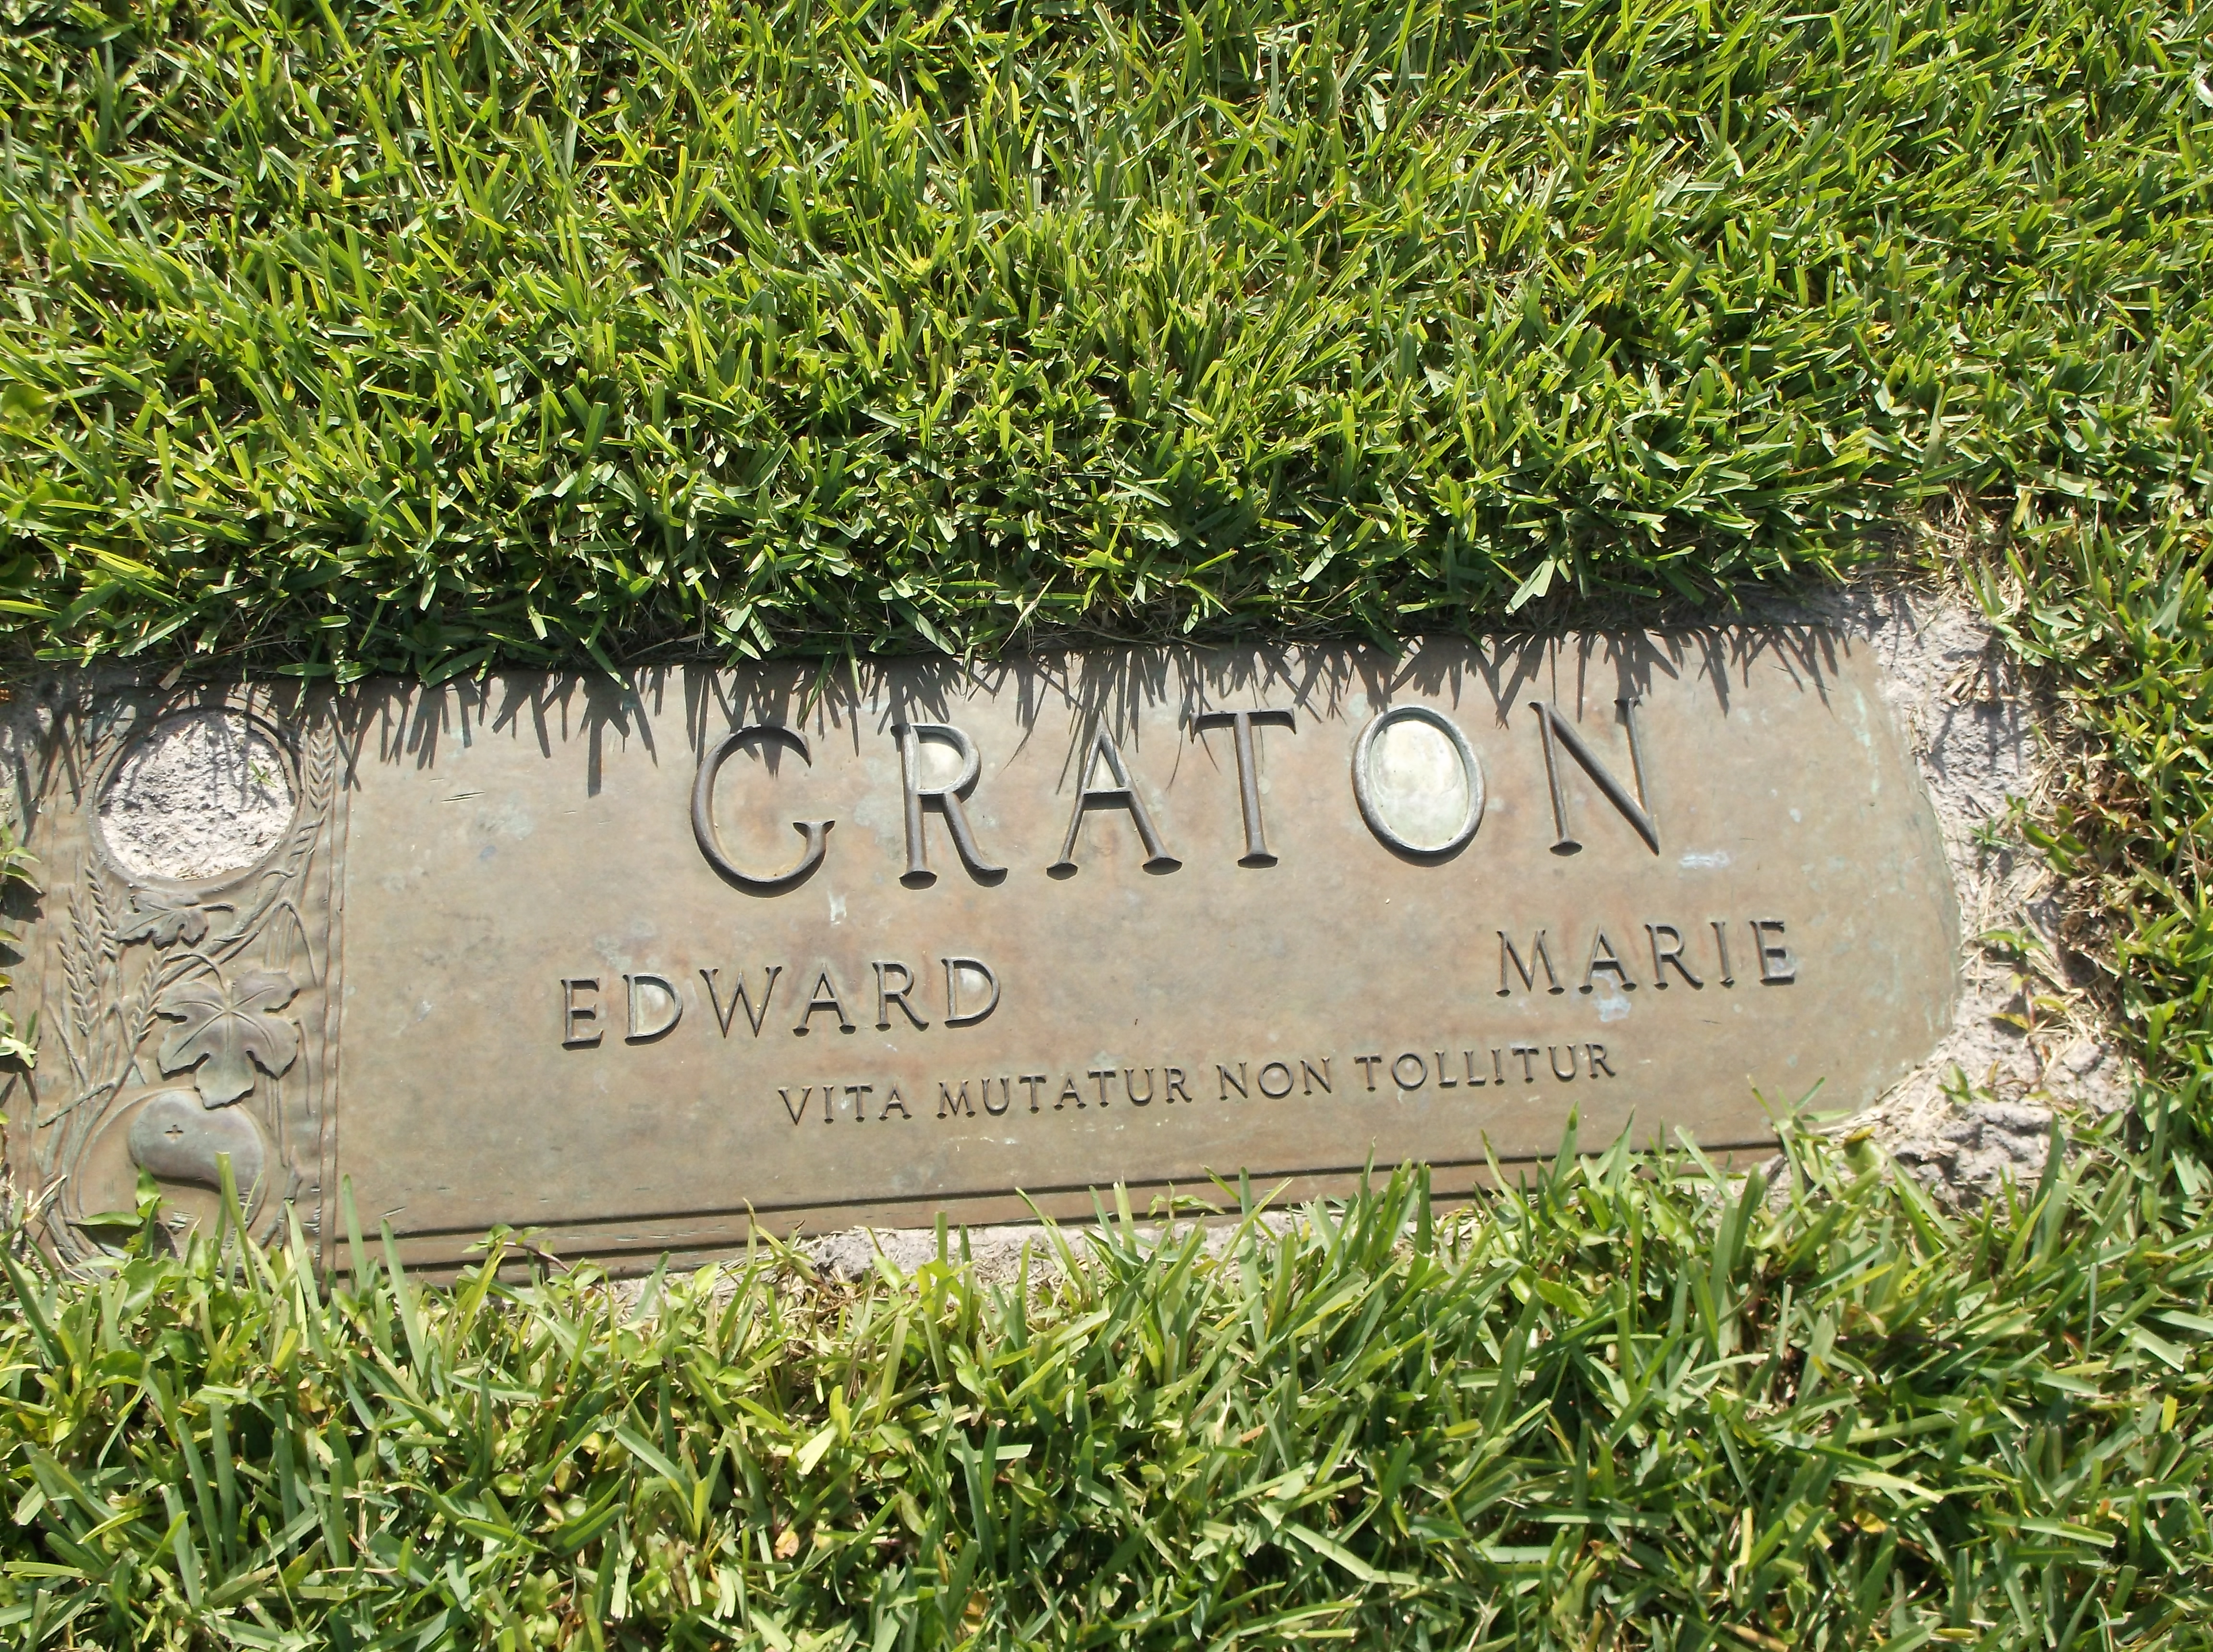 Edward Graton